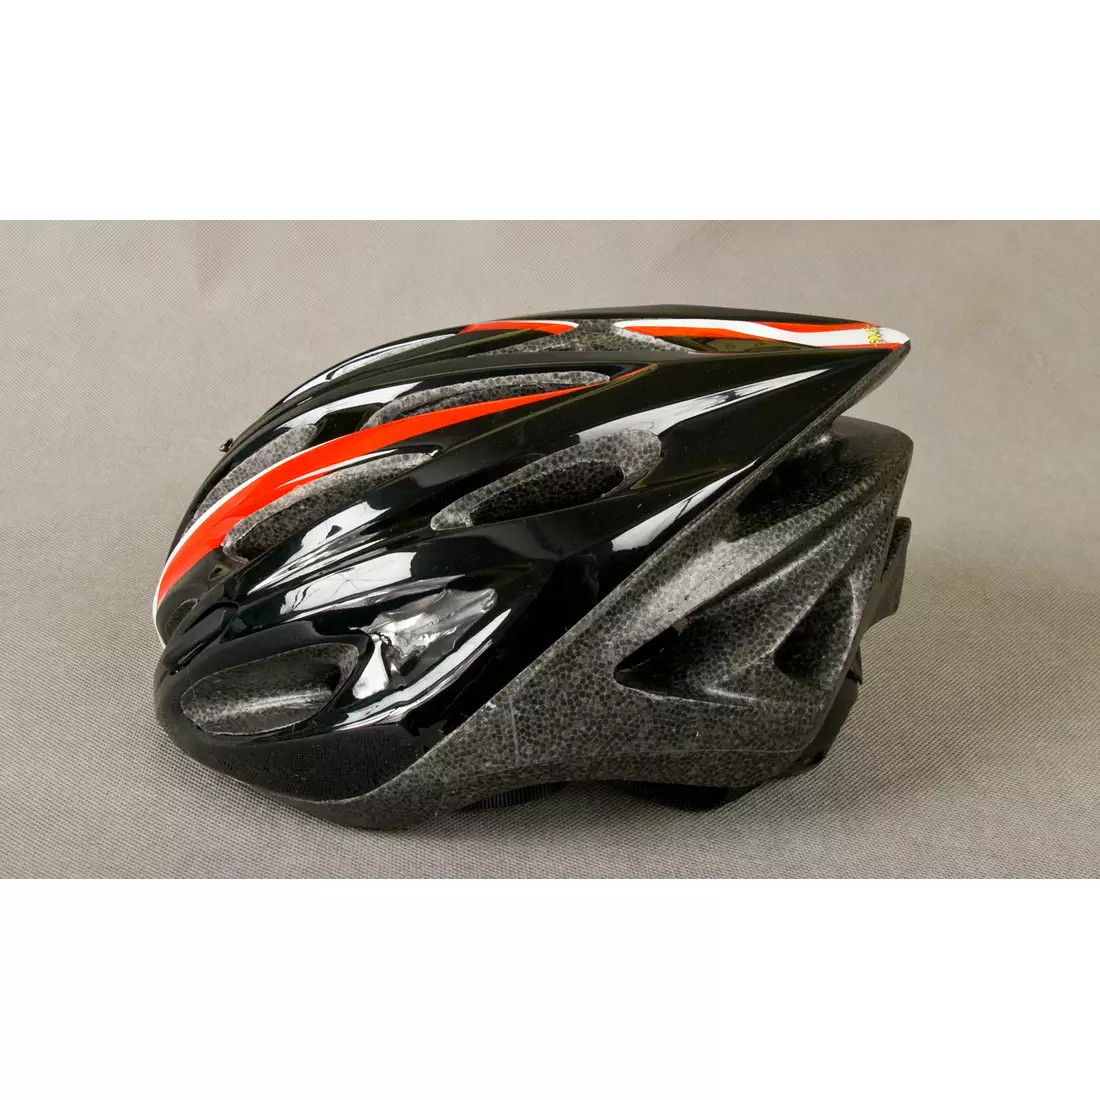 Cyklistická helma BELL SOLAR černo červená